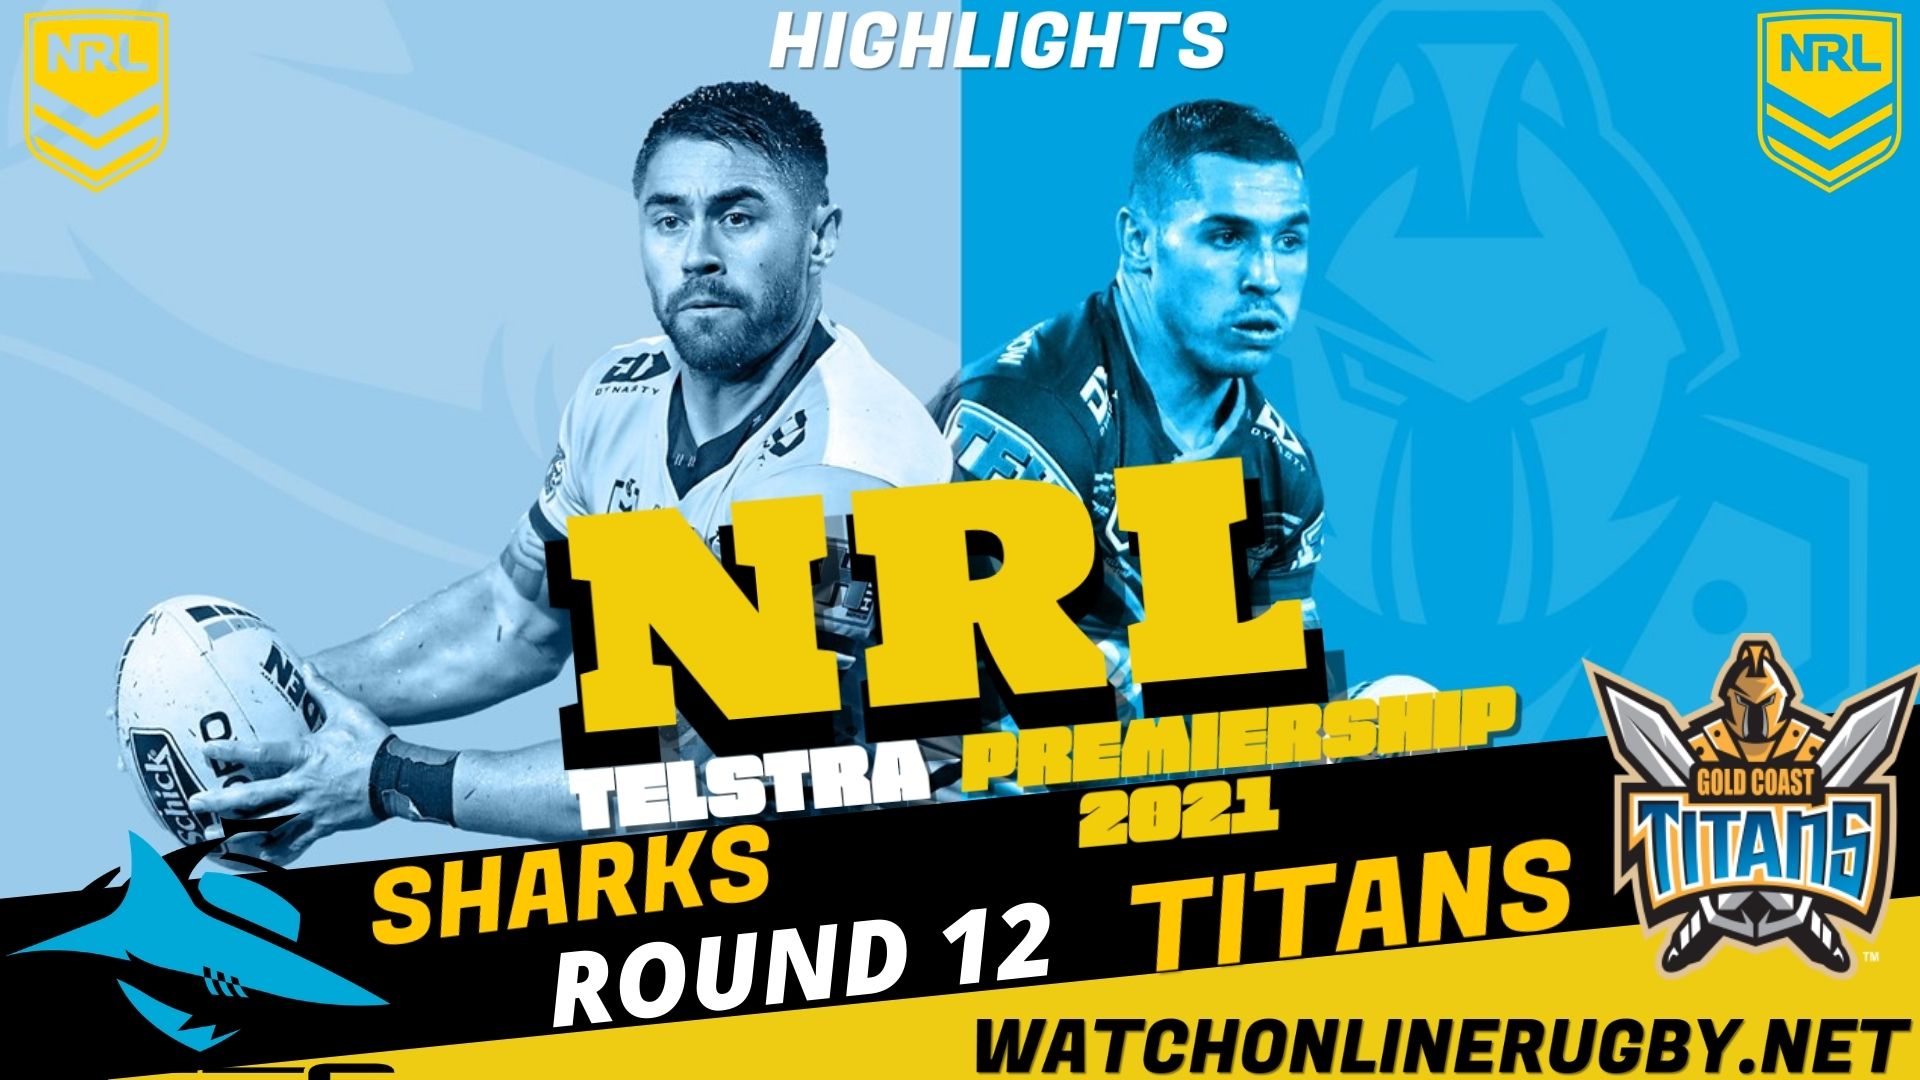 Sharks Vs Titans Highlights RD 12 NRL Rugby